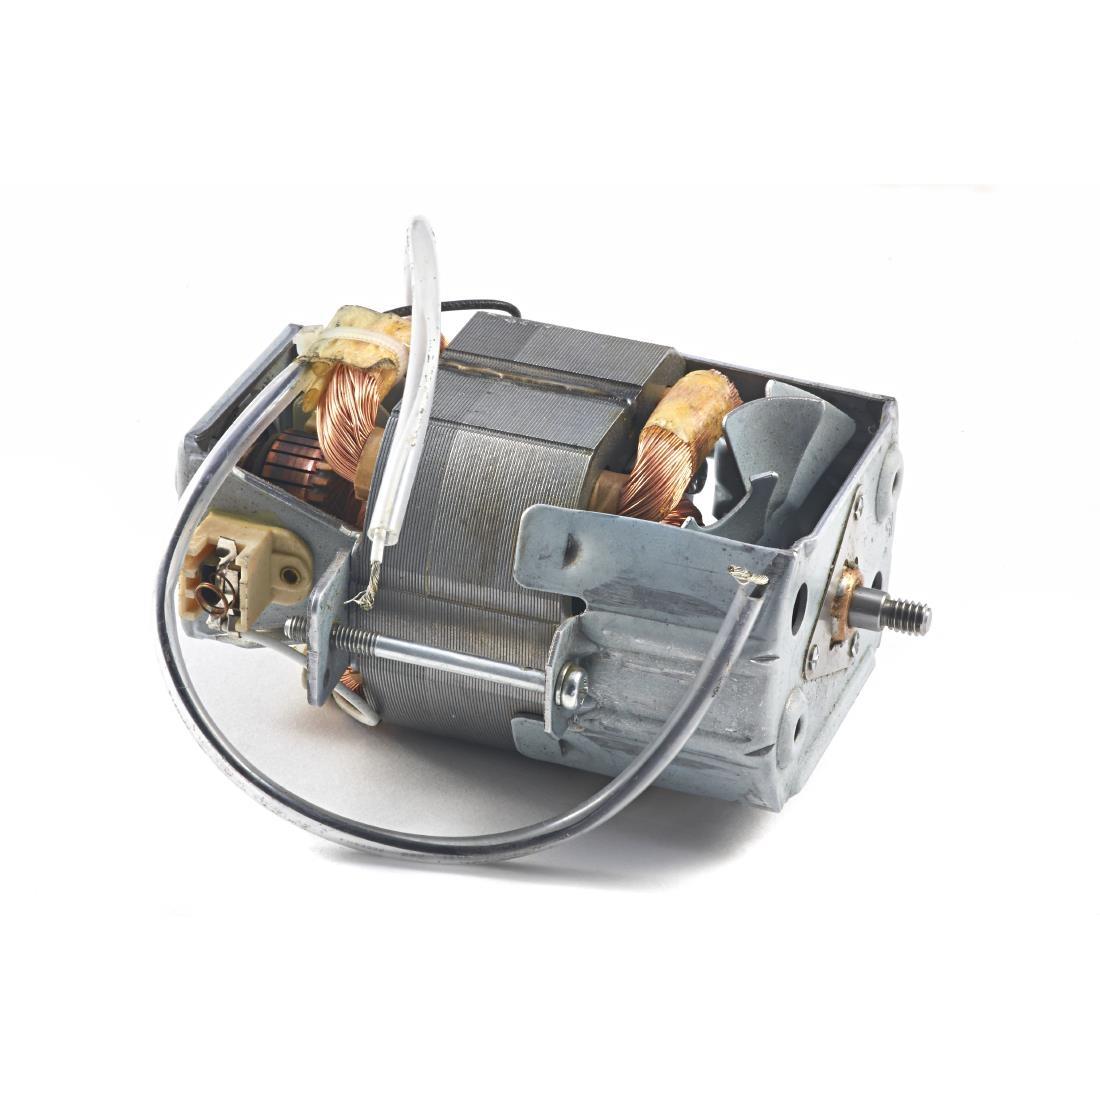 Motor for F130 F228 K225 (2 wire)  WA271